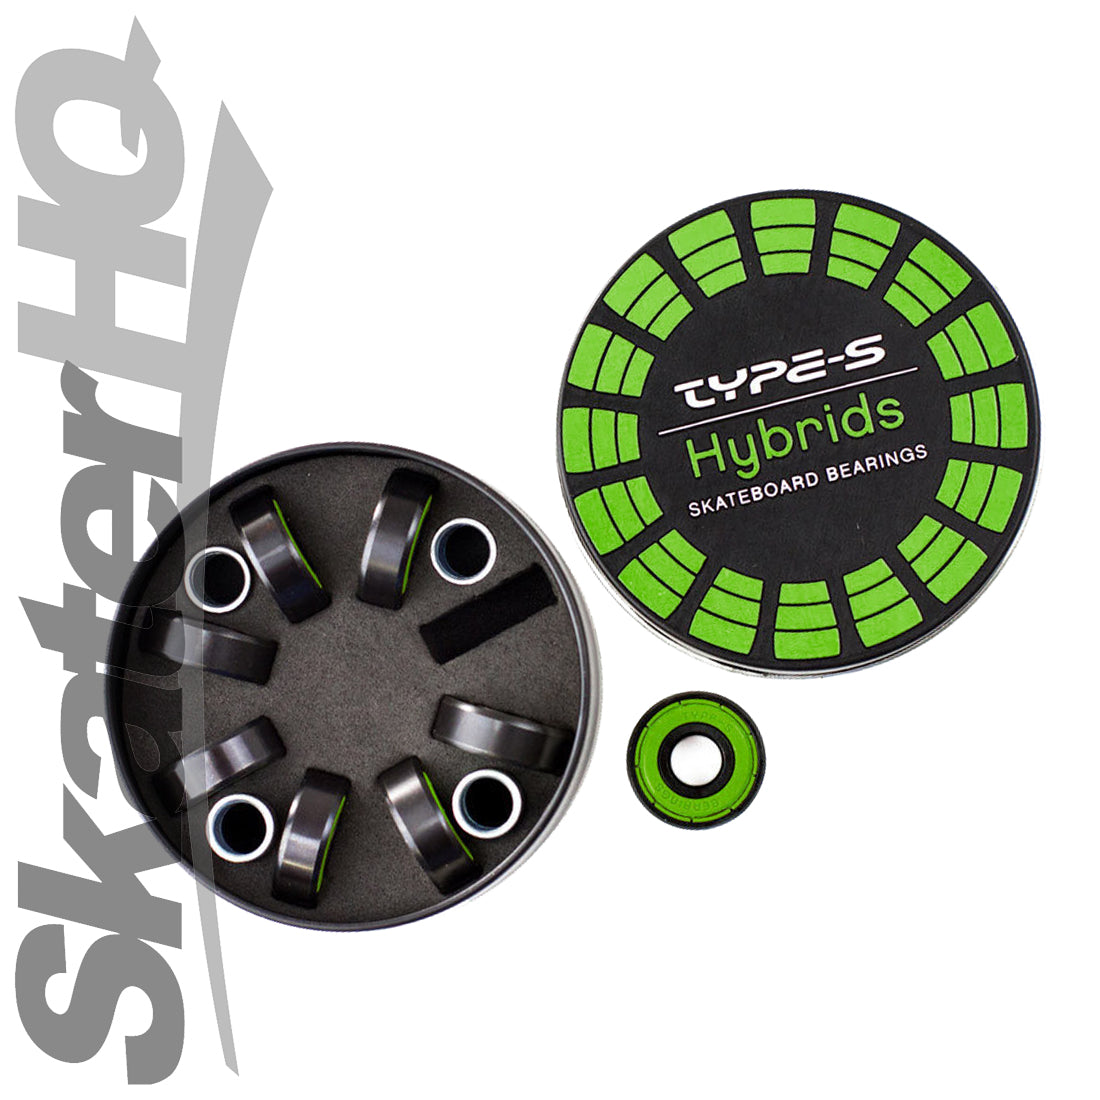 Type-S Hybrid Bearings 8pk - Green Skateboard Bearings